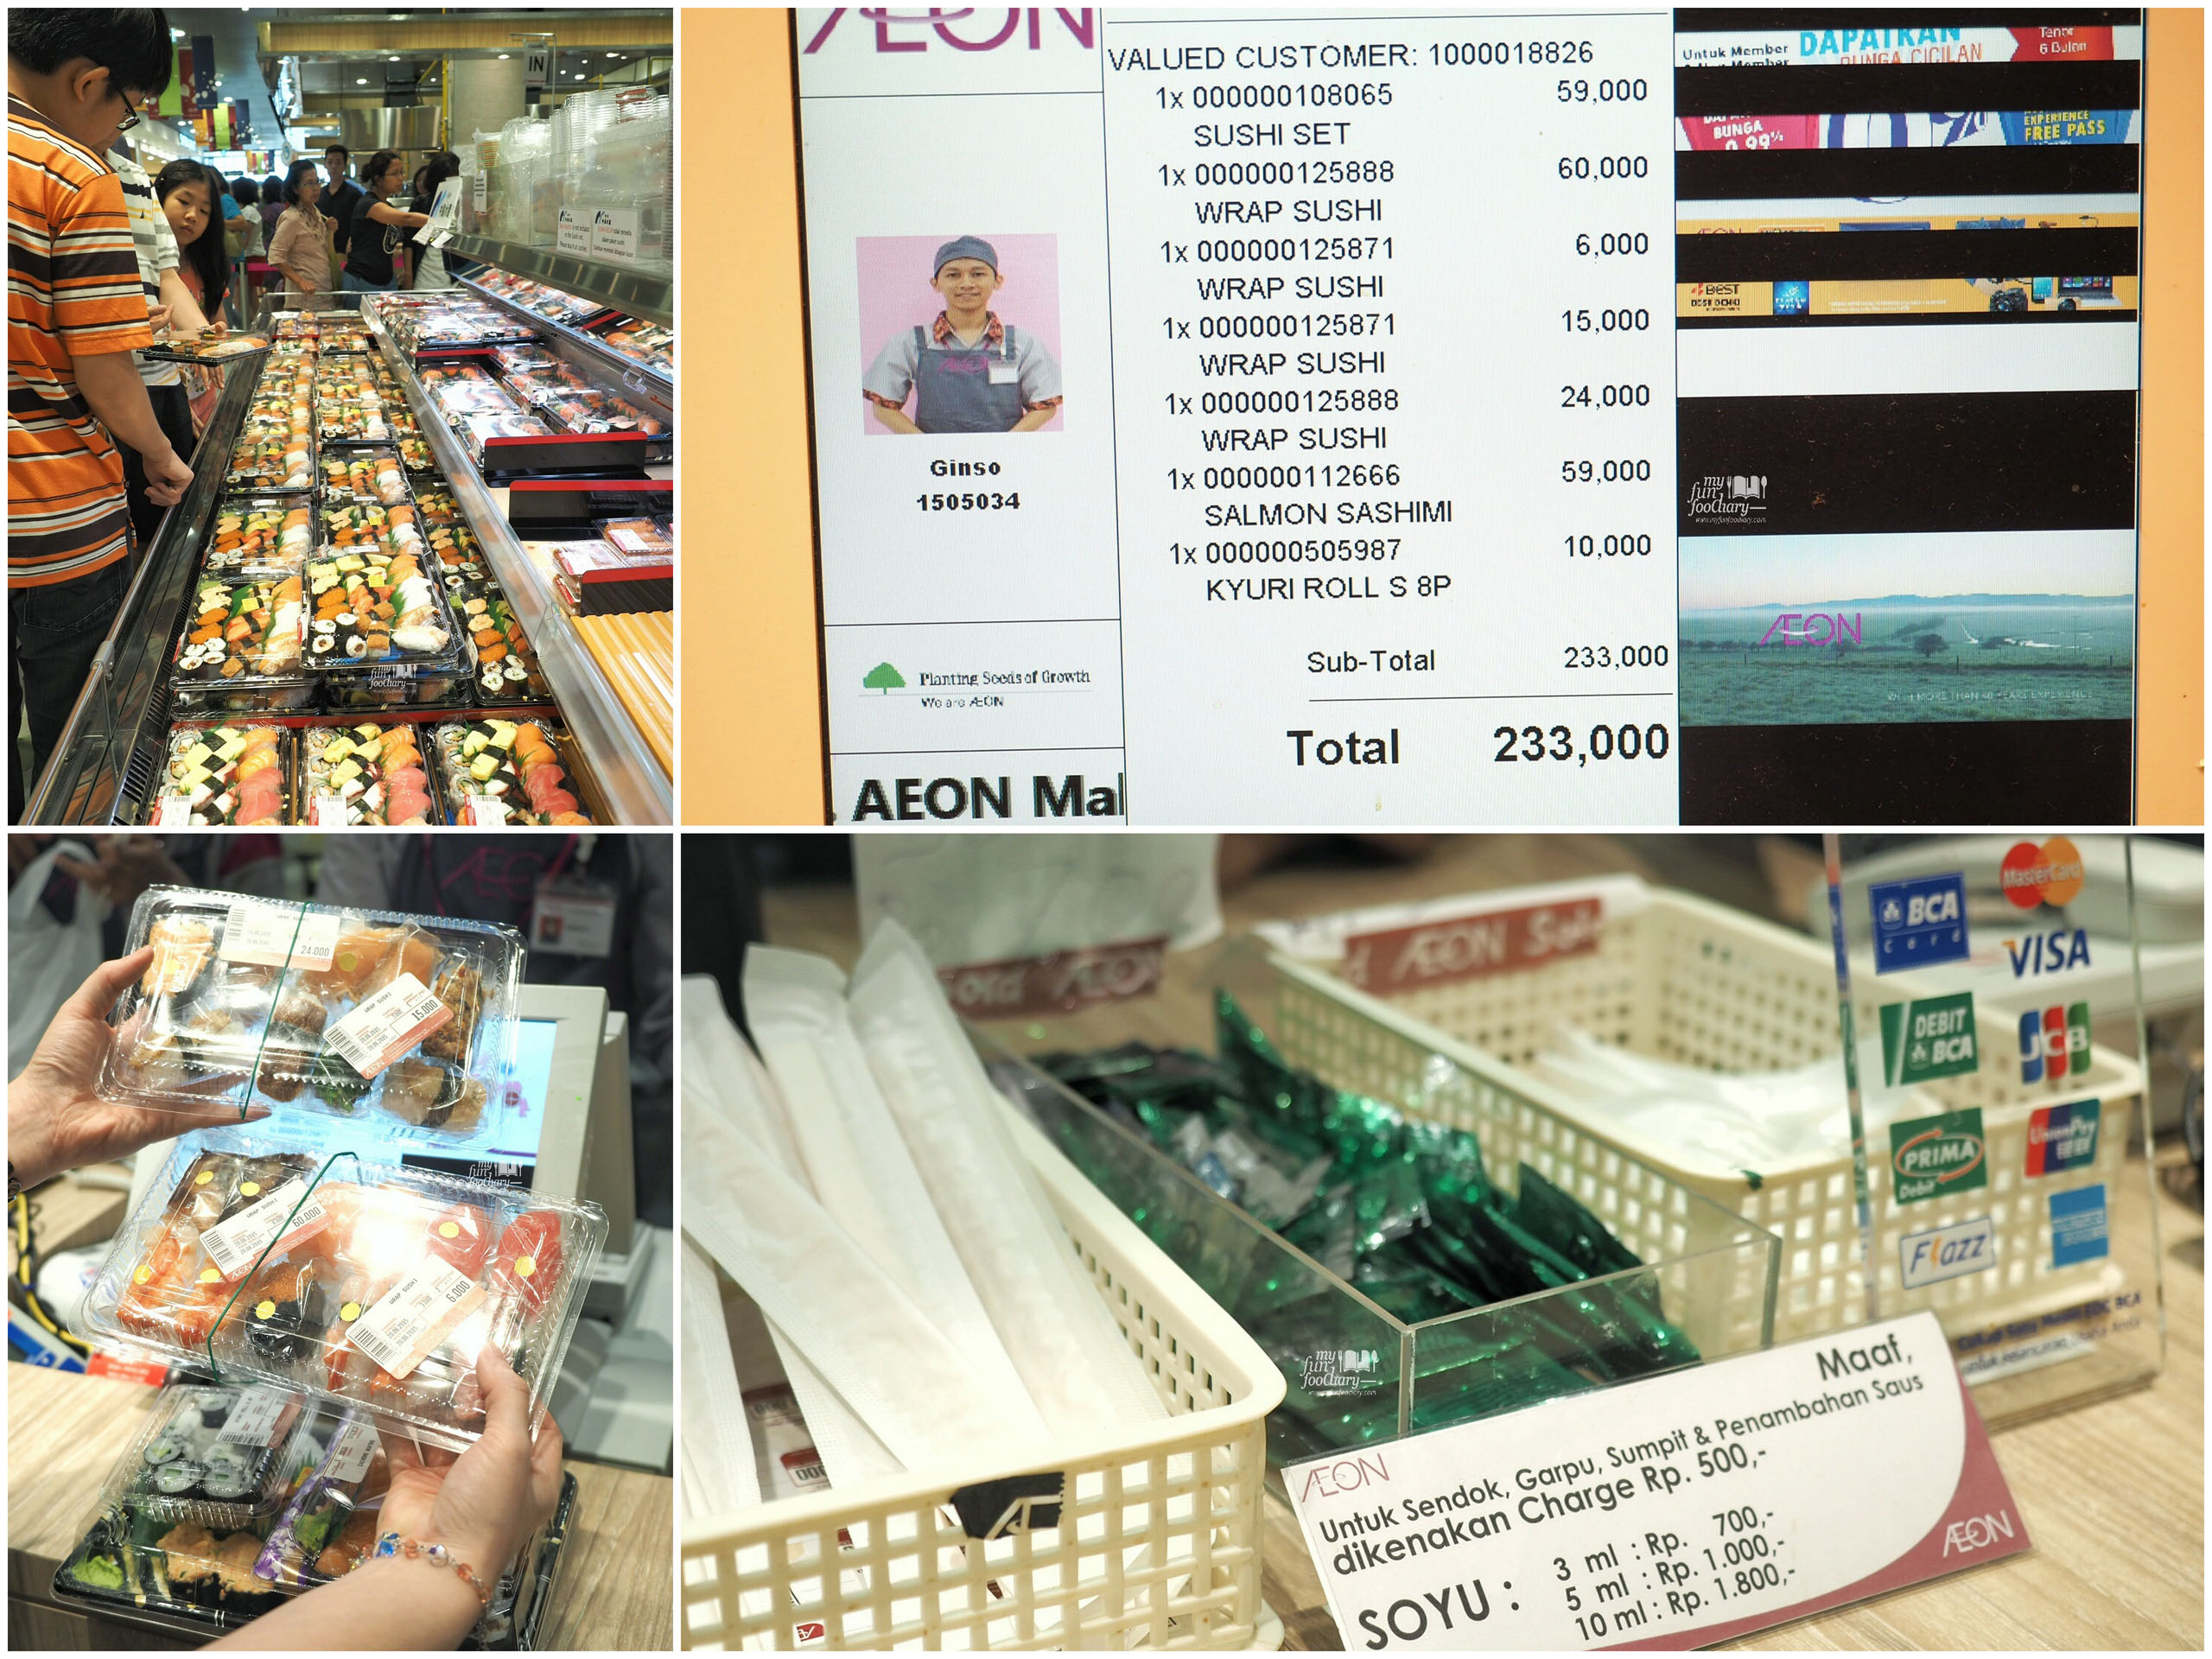 Sushi Hunt inside AEON Mall by Myfunfoodiary